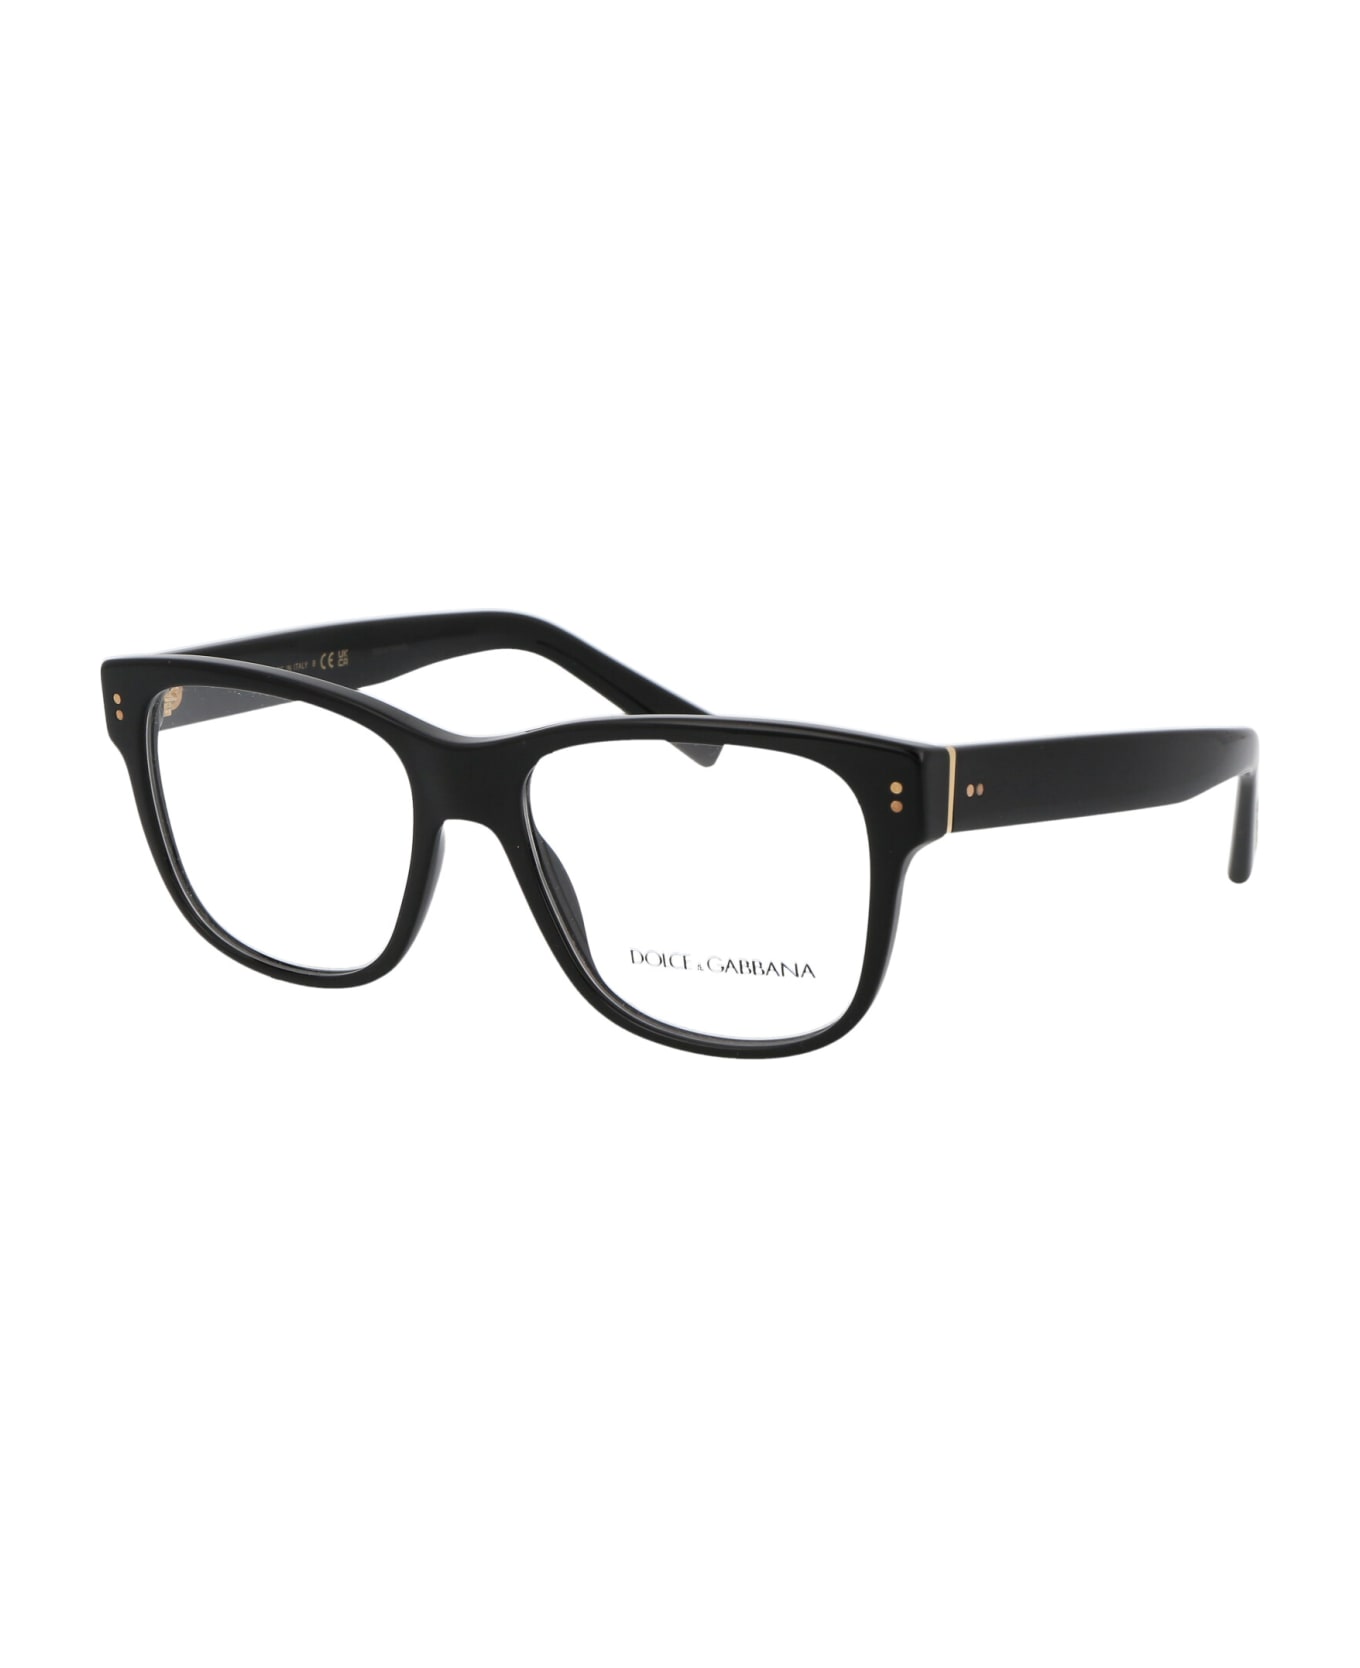 Dolce & Gabbana Eyewear 0dg3305 Glasses - 501 BLACK アイウェア